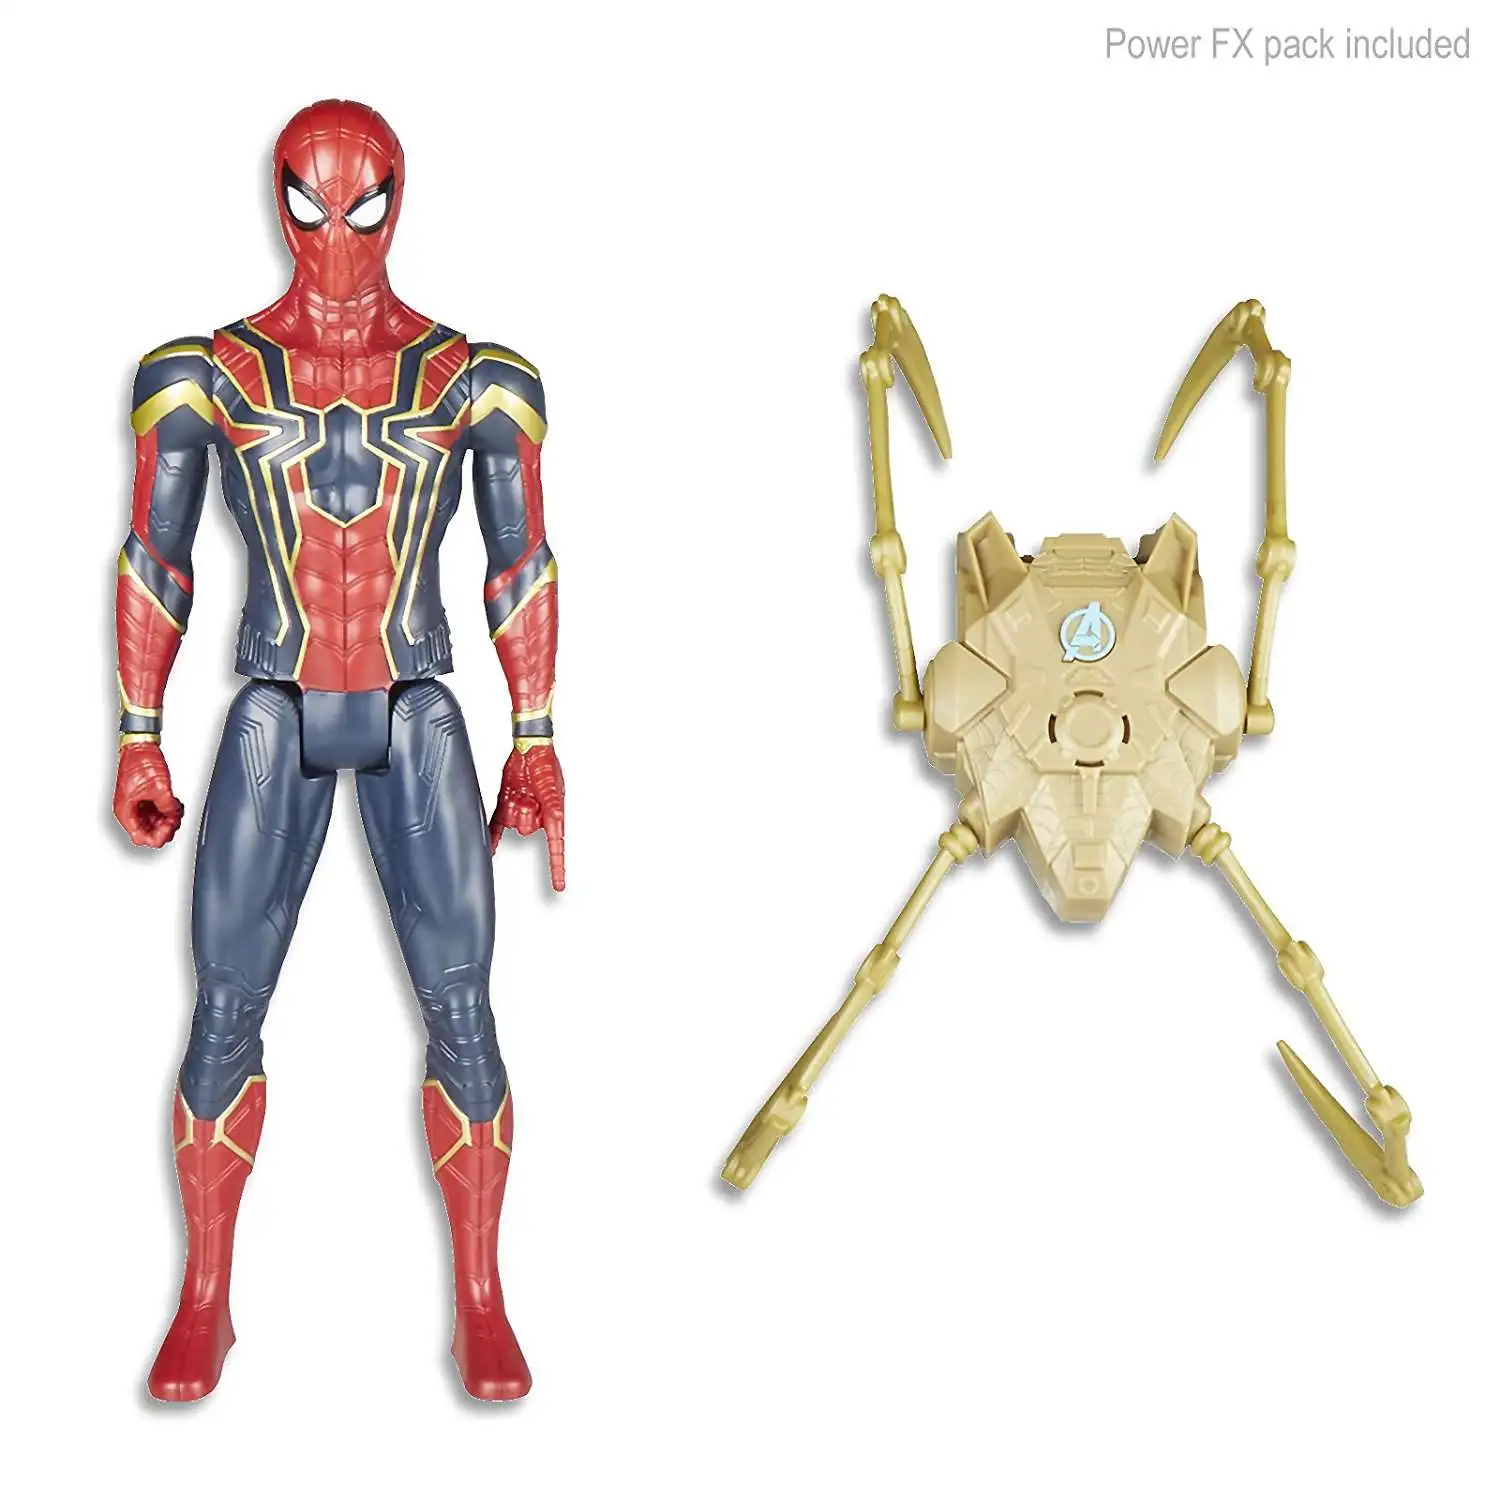 Details about   Hasbro Titan Hero Series Power FX Avengers Infinity War Iron Spider Spanish HTF 